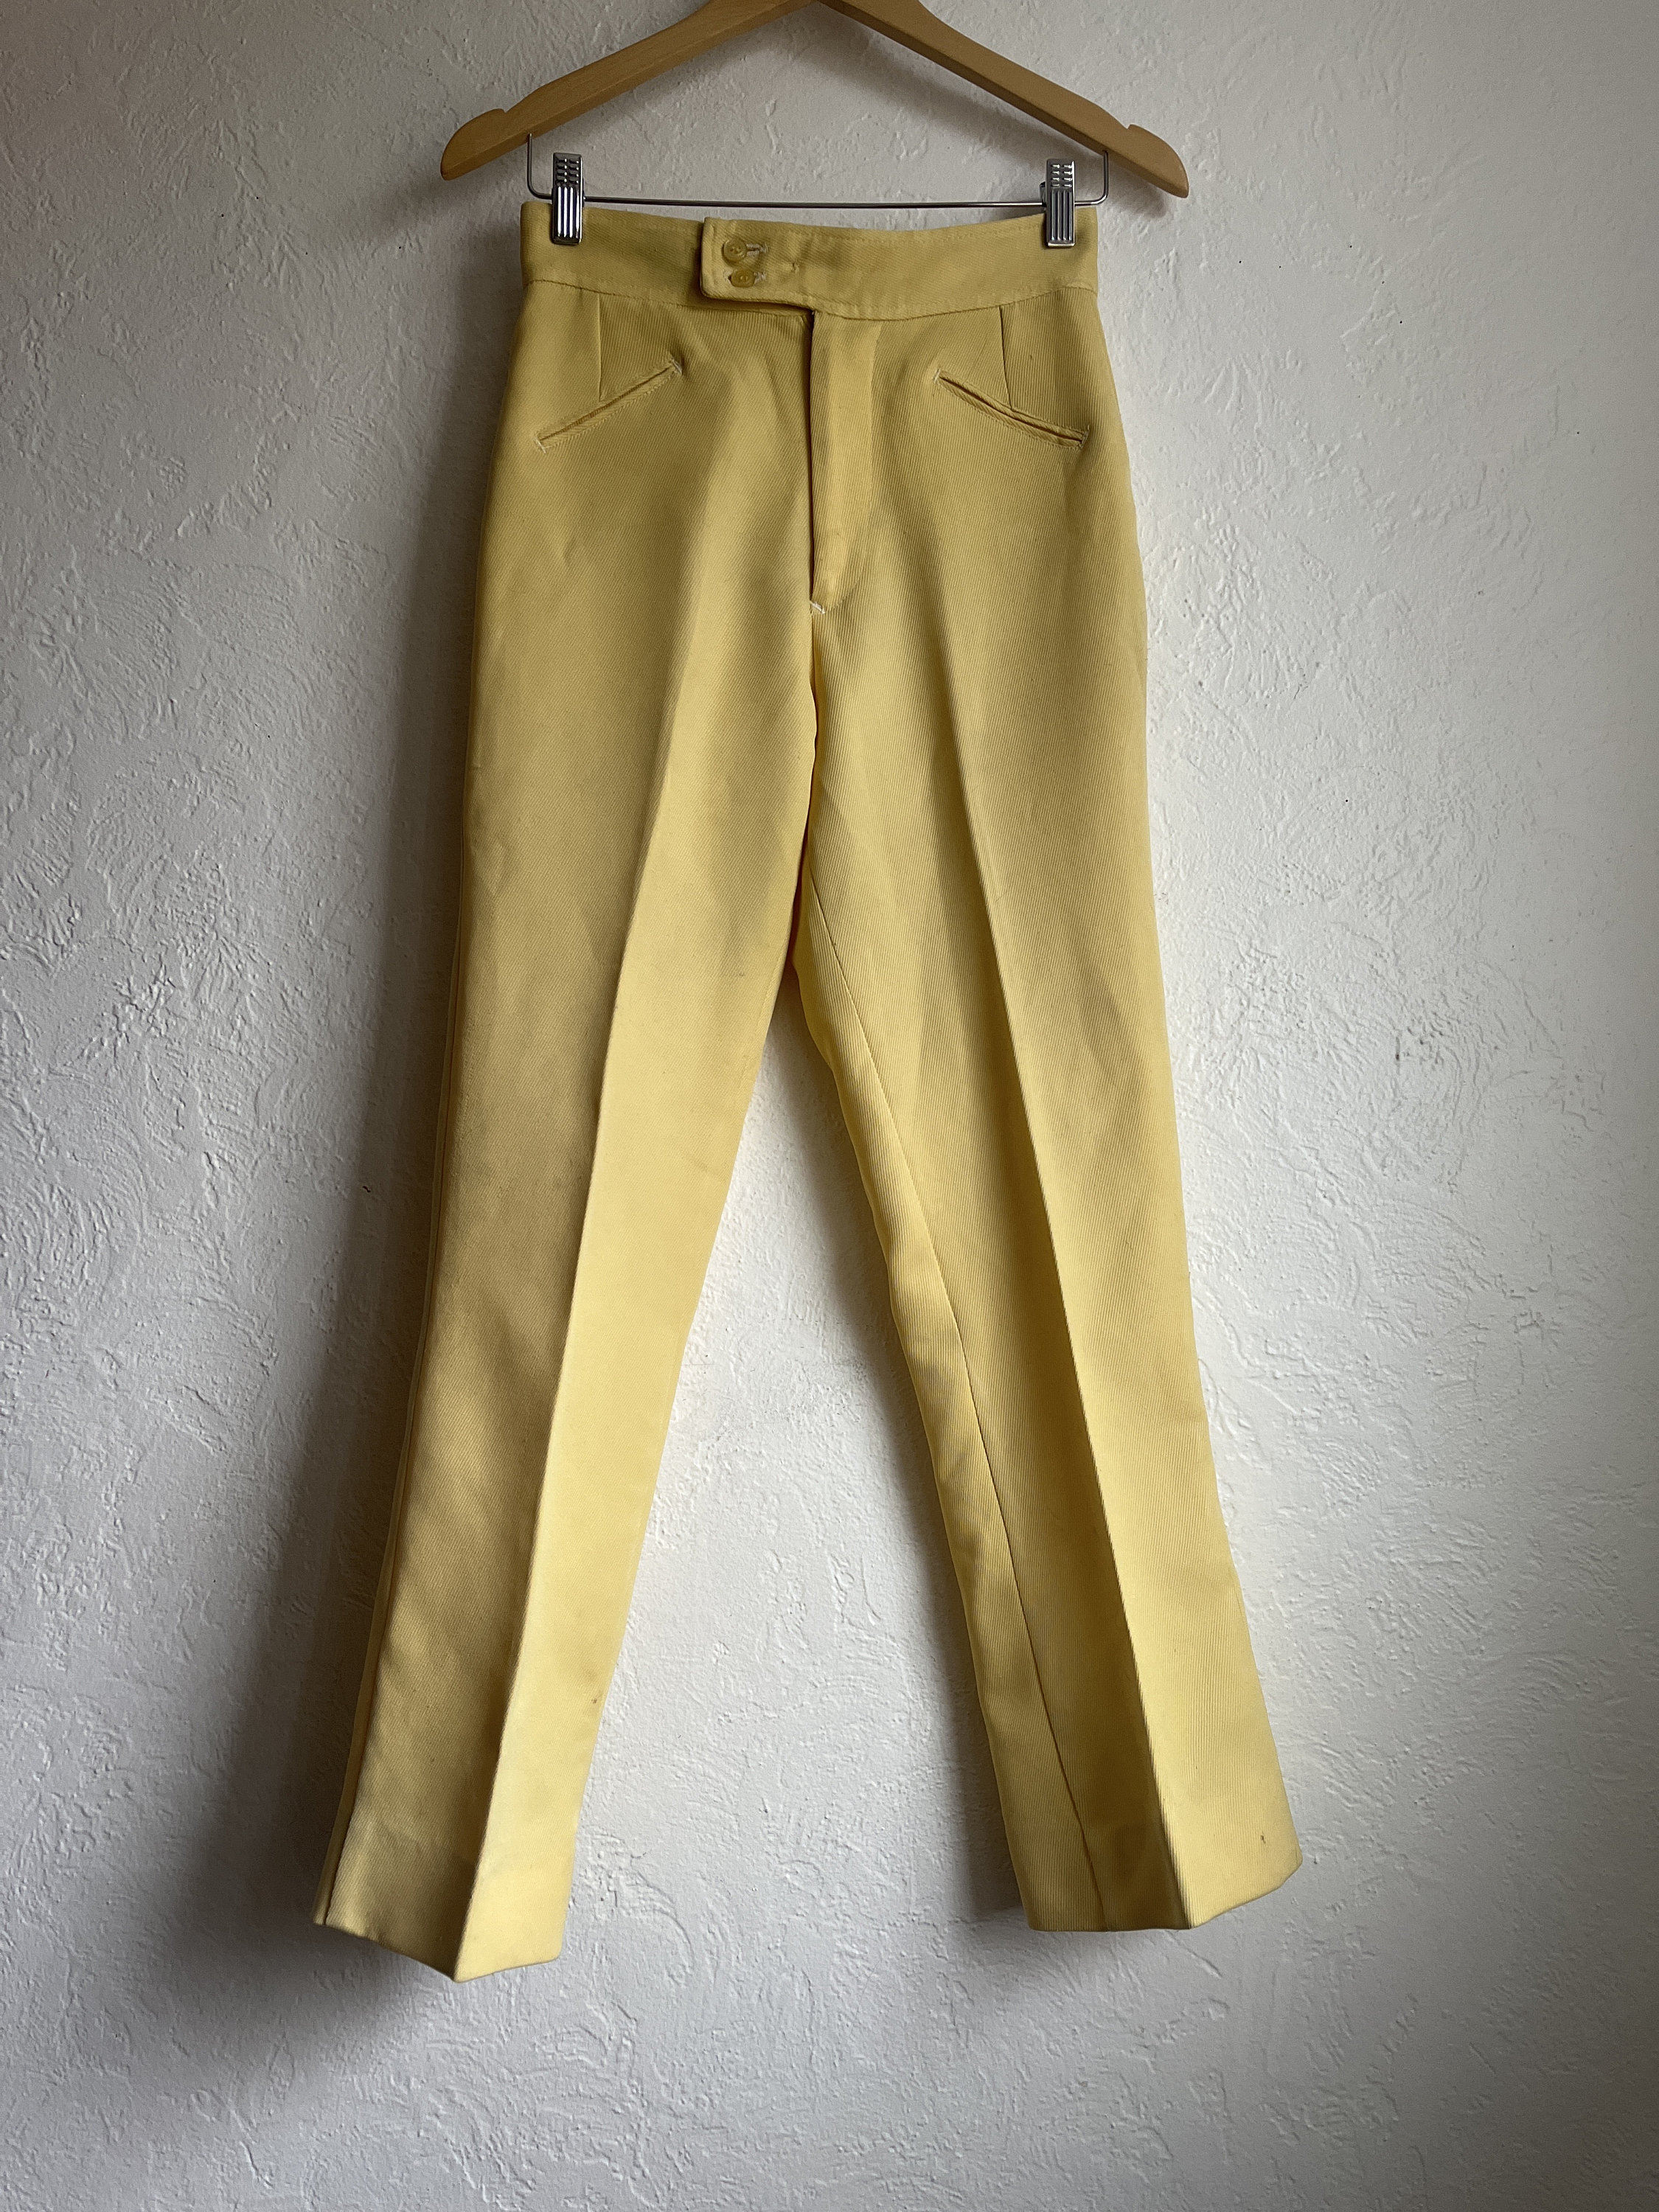 Buy Yellow Trousers & Pants for Men by Hangup Trend Online | Ajio.com